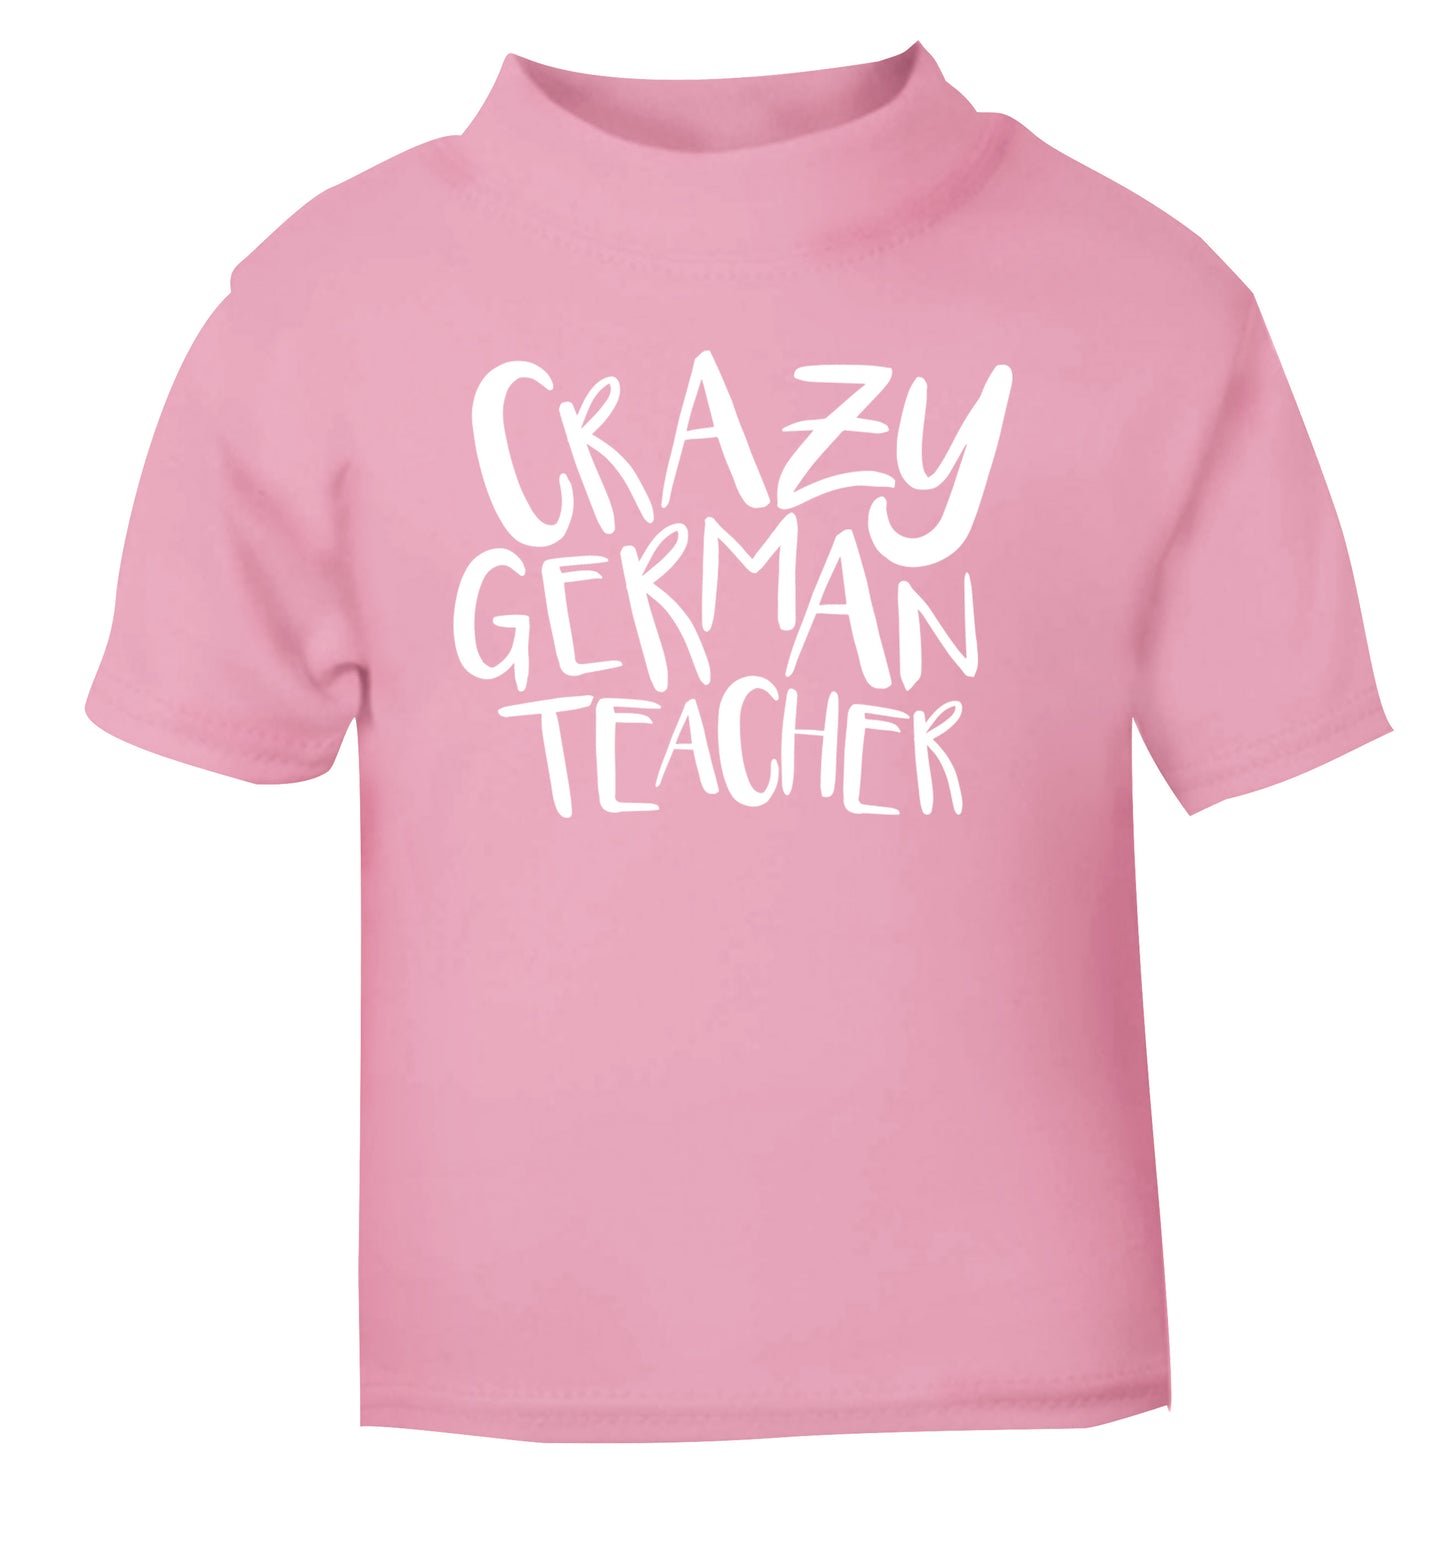 Crazy german teacher light pink Baby Toddler Tshirt 2 Years